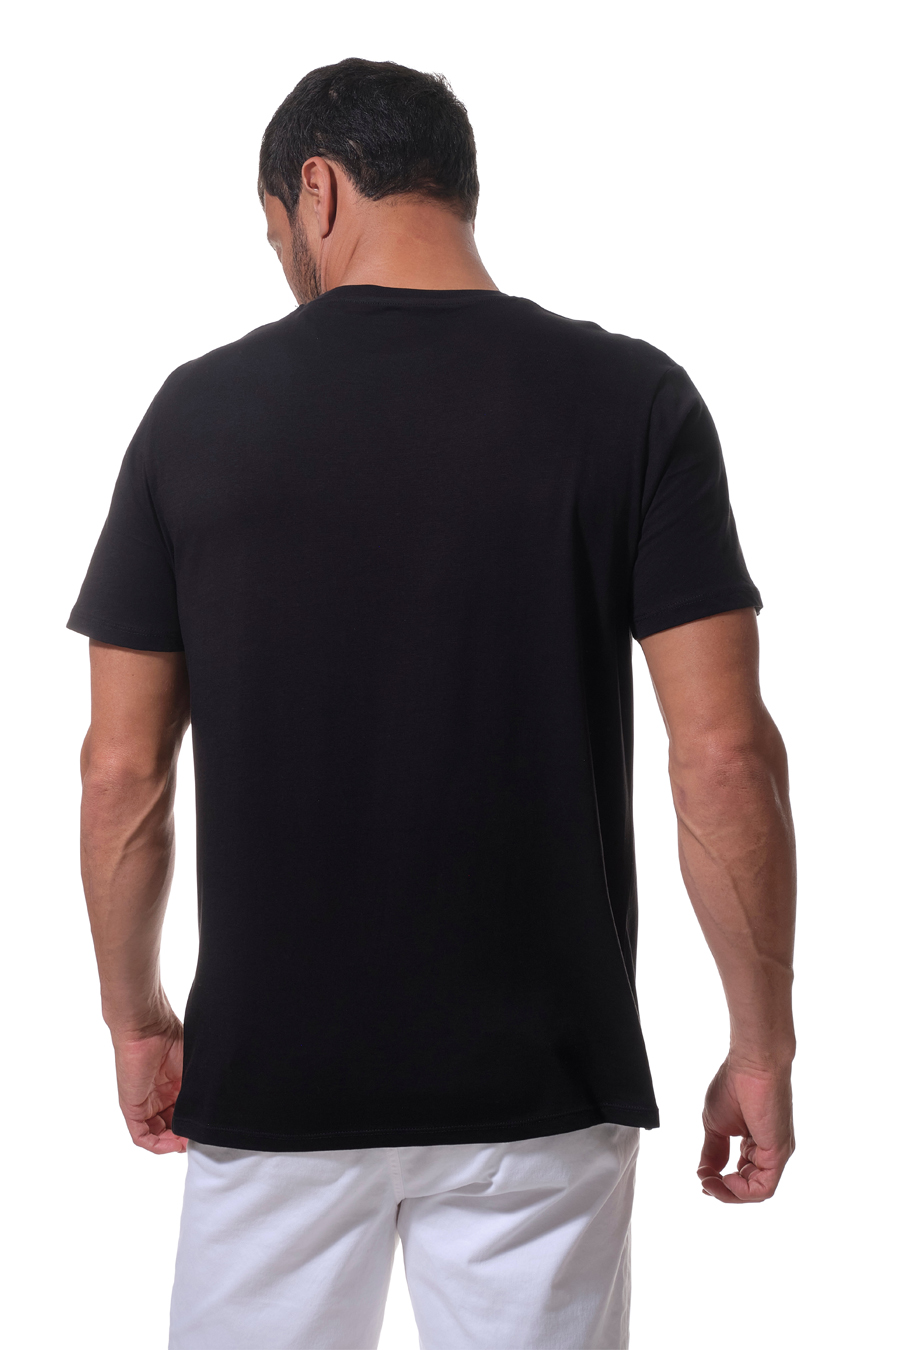 OTSM301 : tee-shirt mixte homme-femme Hublot